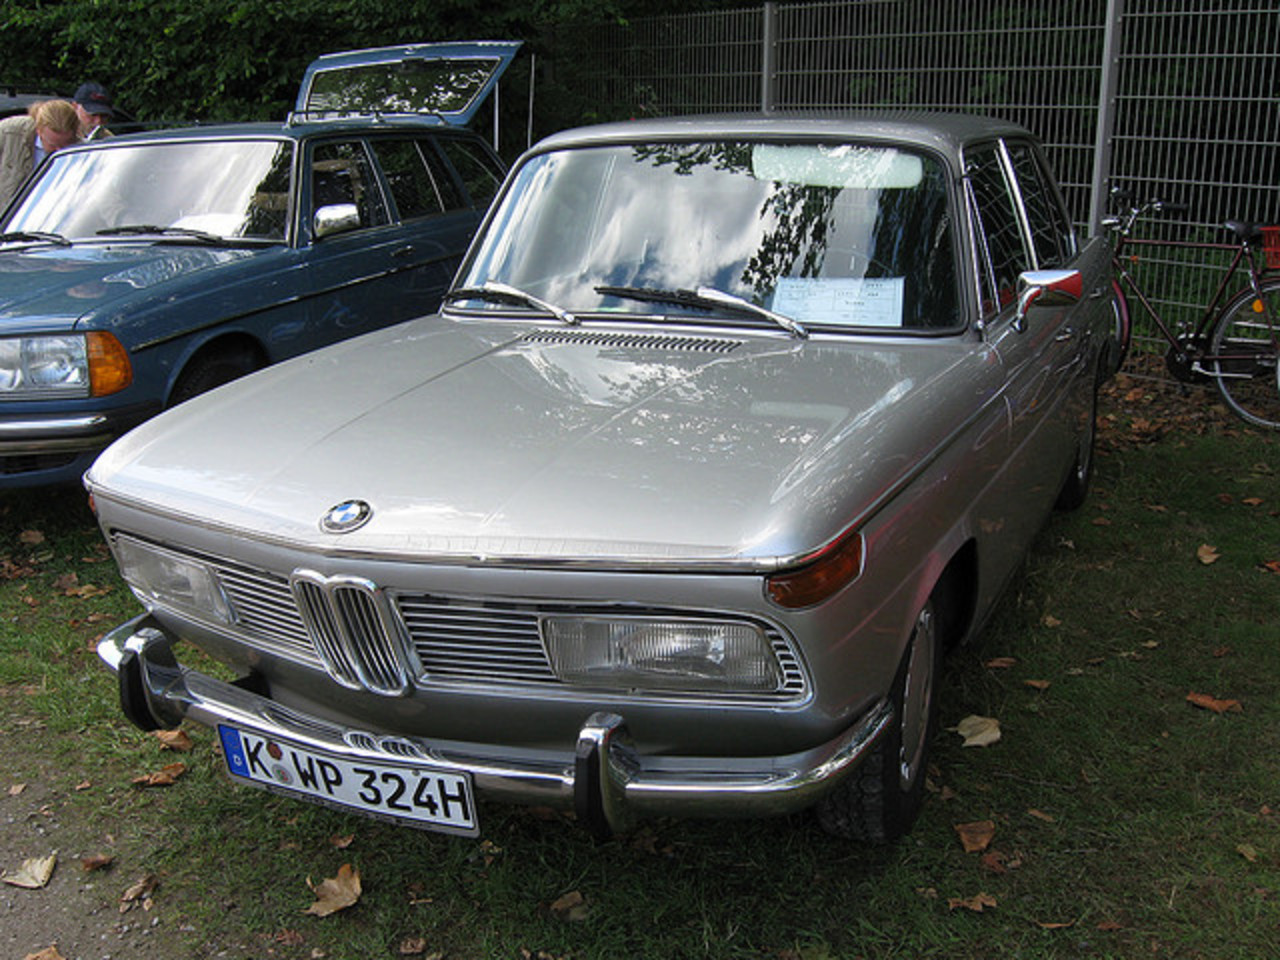 BMW 1800 1971 | Flickr - Photo Sharing!